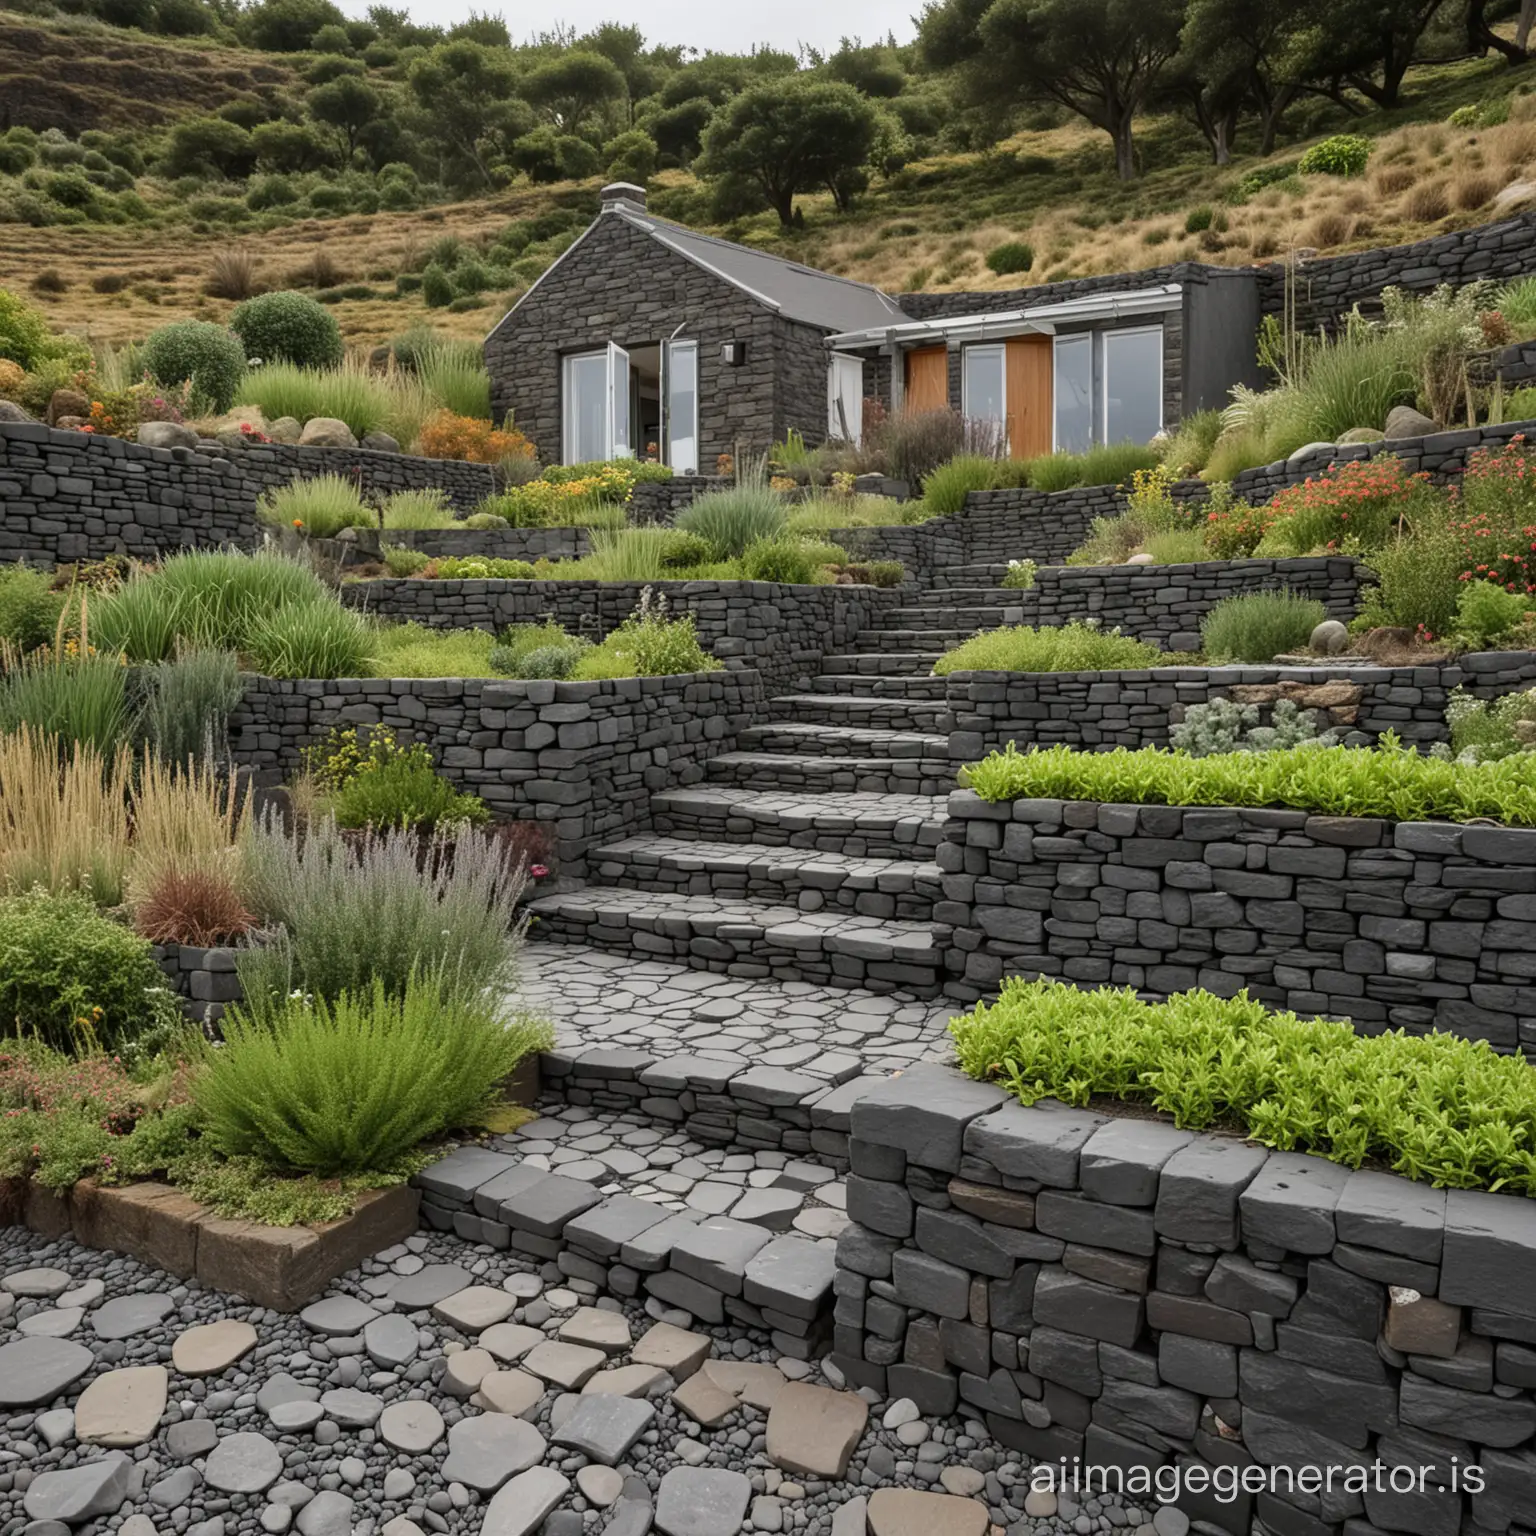 Basalt-Stone-Herb-Garden-and-Azorean-Cottage-in-High-Definition